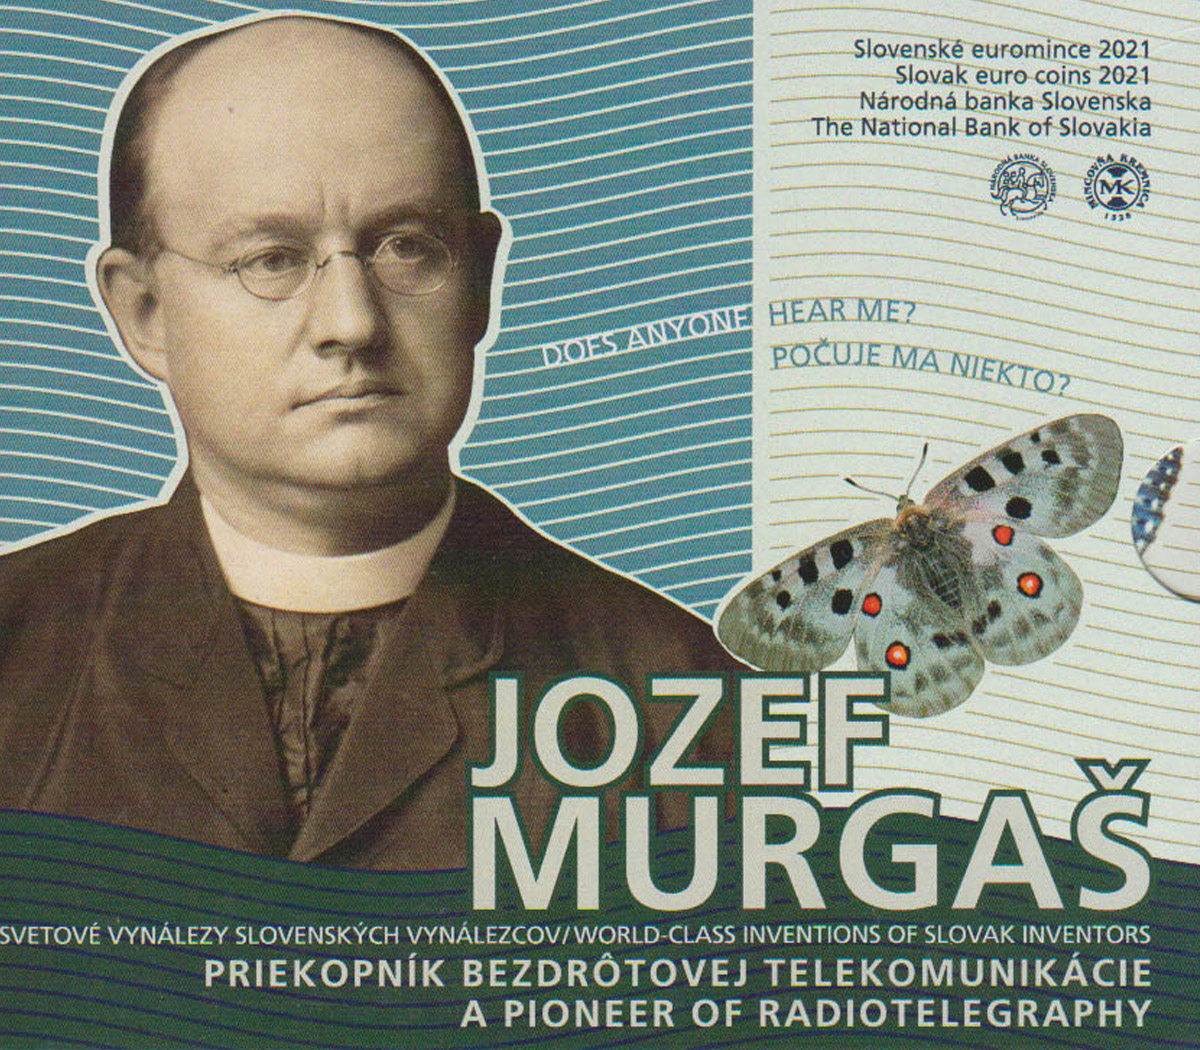  Offiz. Euro-KMS Slowakei *Josef Murgas - Pionier der Telegrafie* 2021 nur 2.000 Stück!   